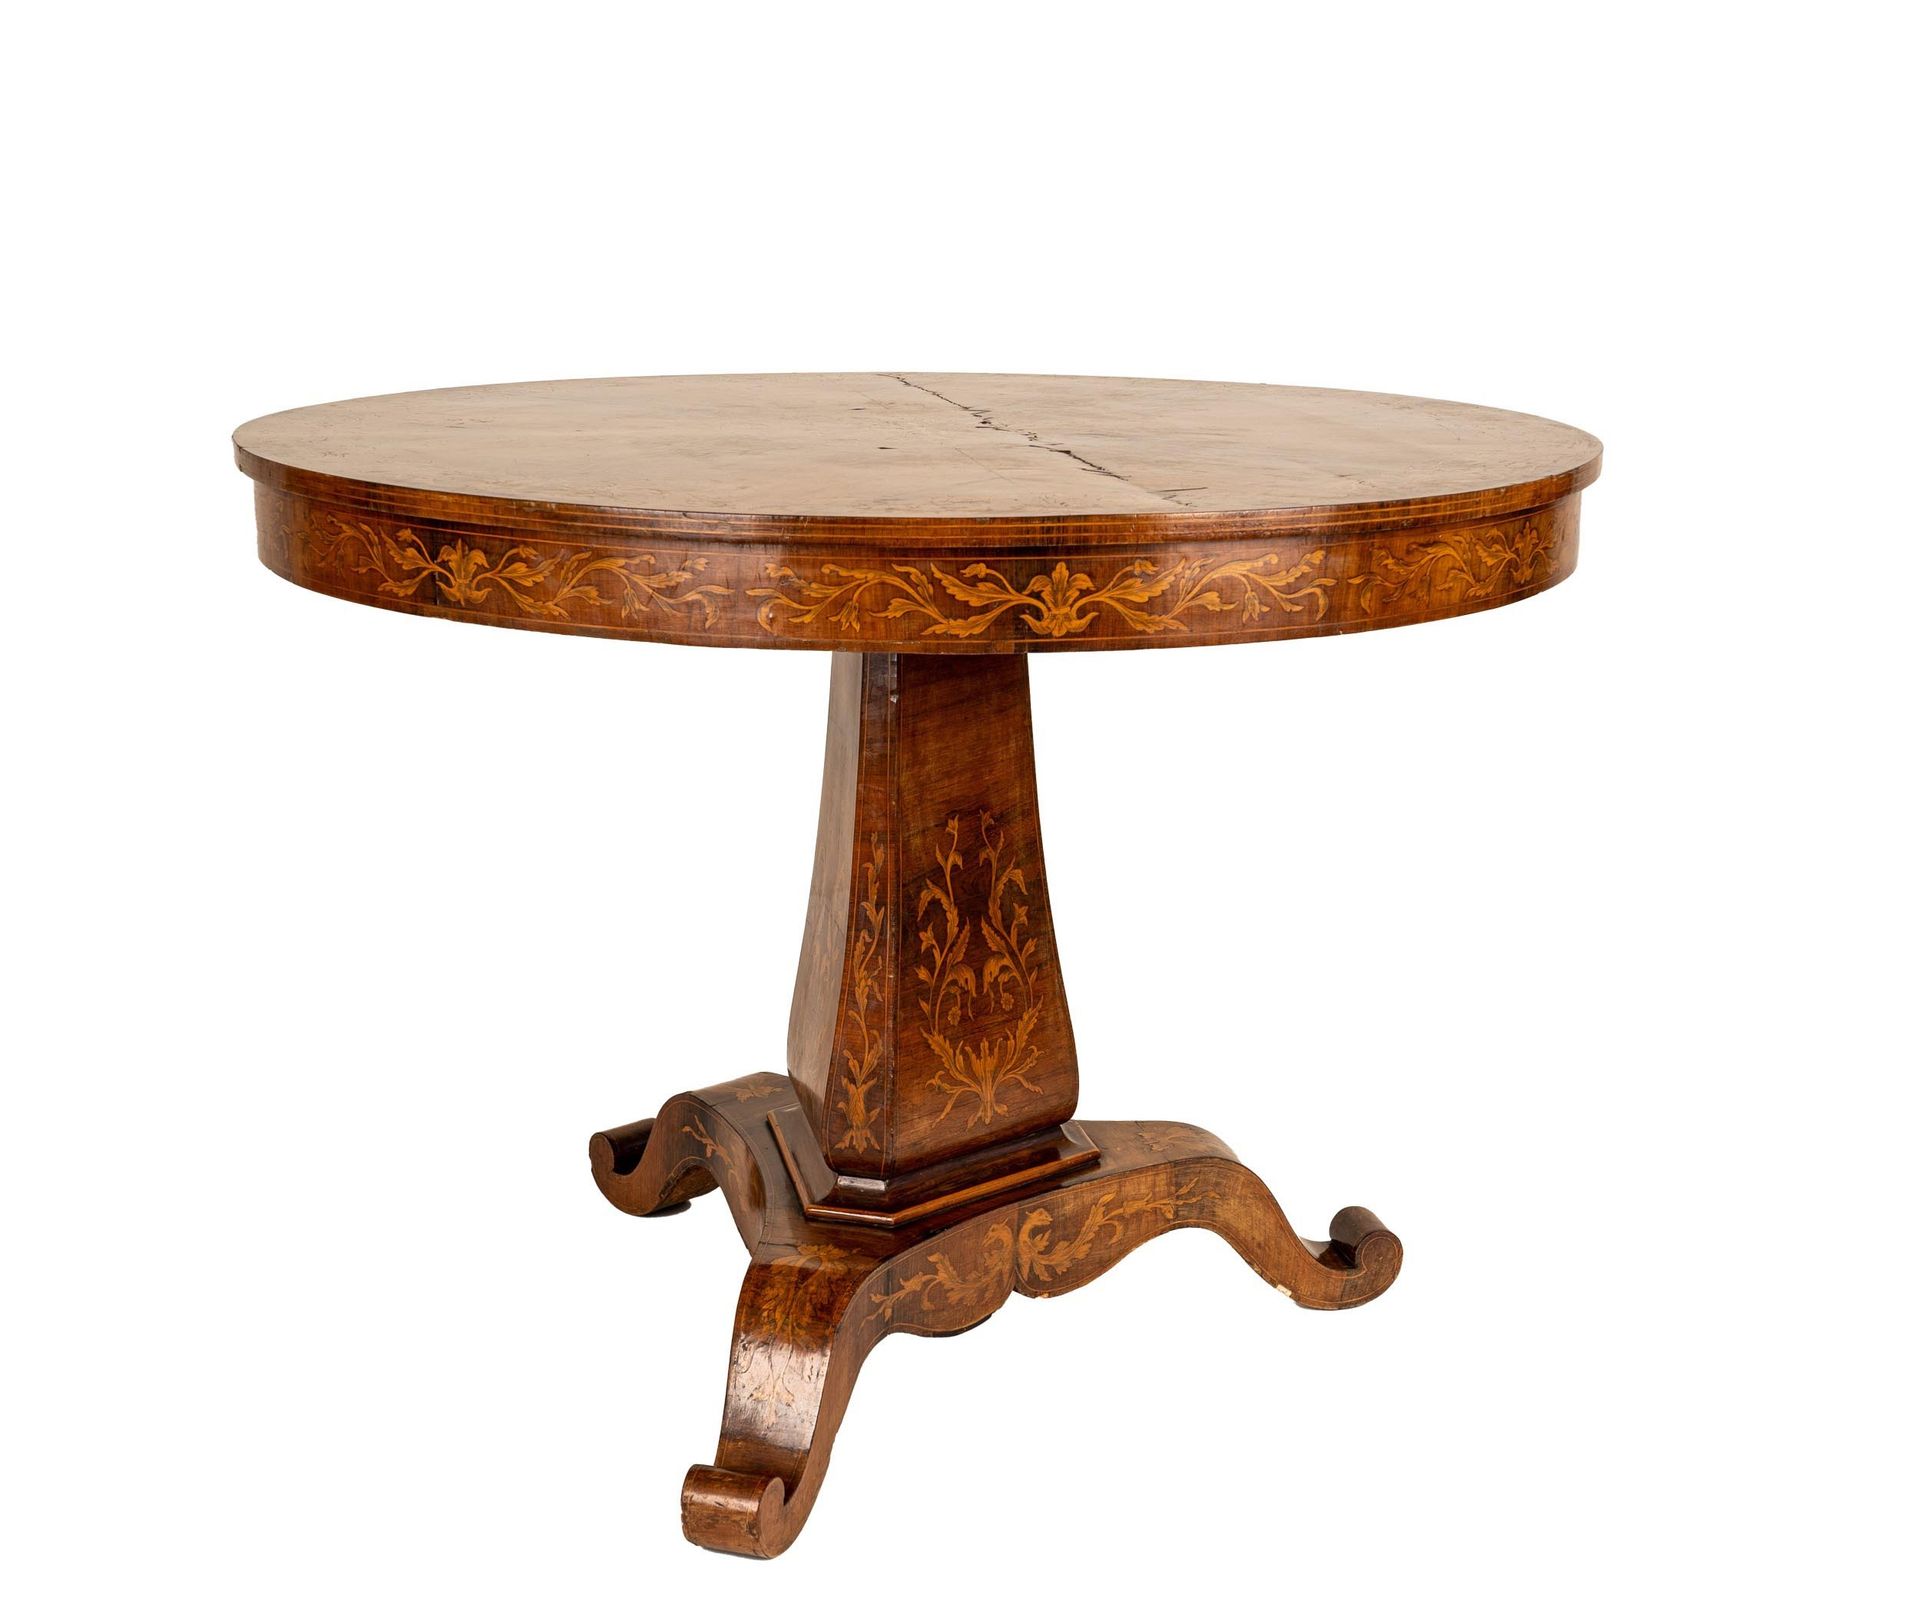 Null 中心桌，西西里岛，查理十世时期


约1830年


镶嵌胡桃木，圆顶，巴勒斯特柄，三条弓形腿


直径110厘米，高80厘米